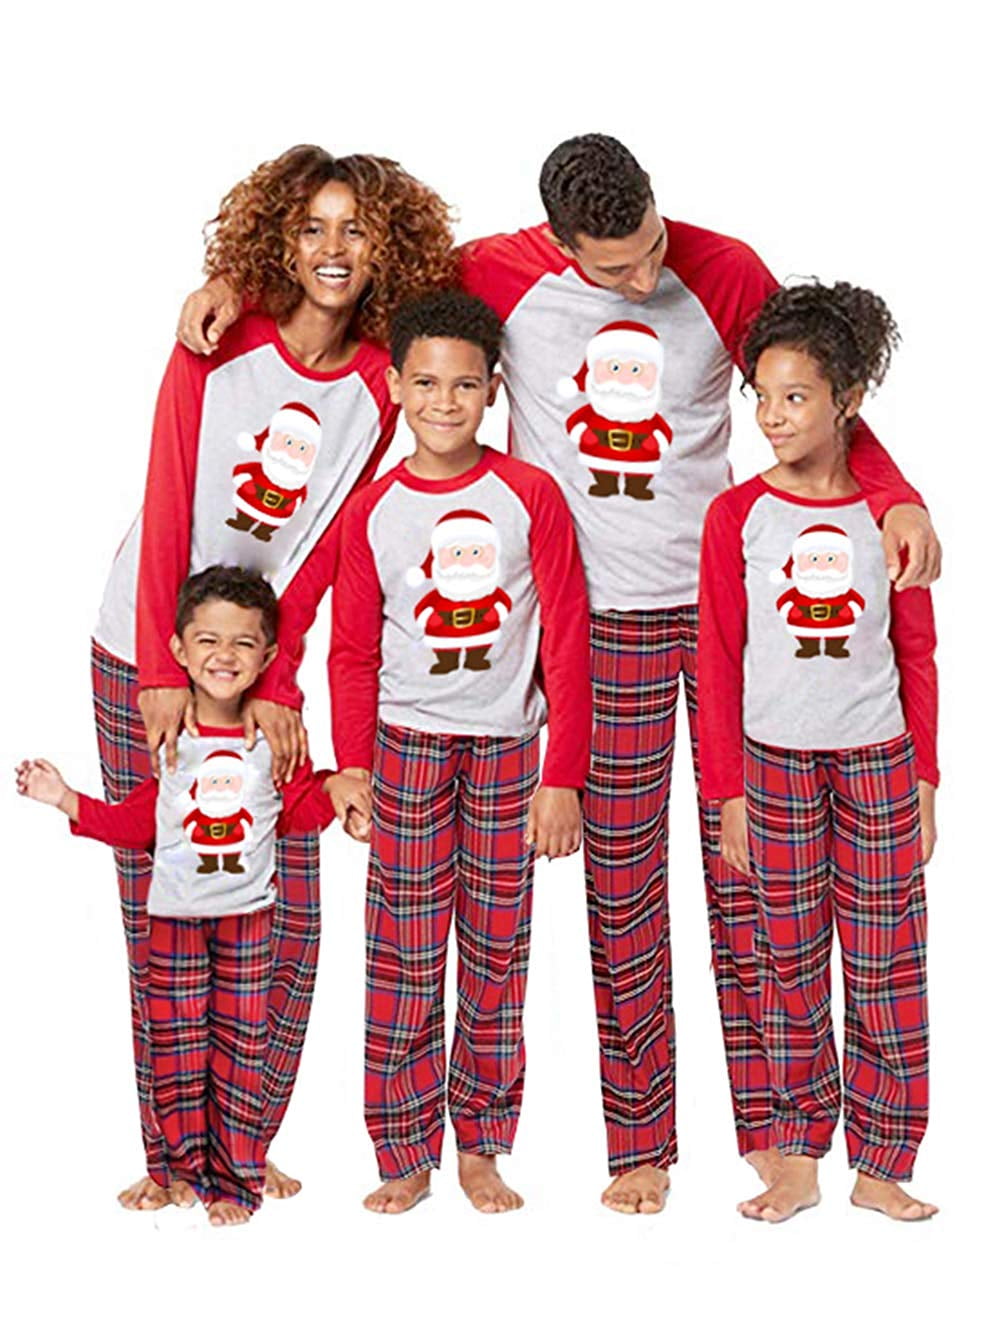 Details about   Family Matching Adults Kids Christmas Pajamas Santa Claus Sleepwear Night Wear 